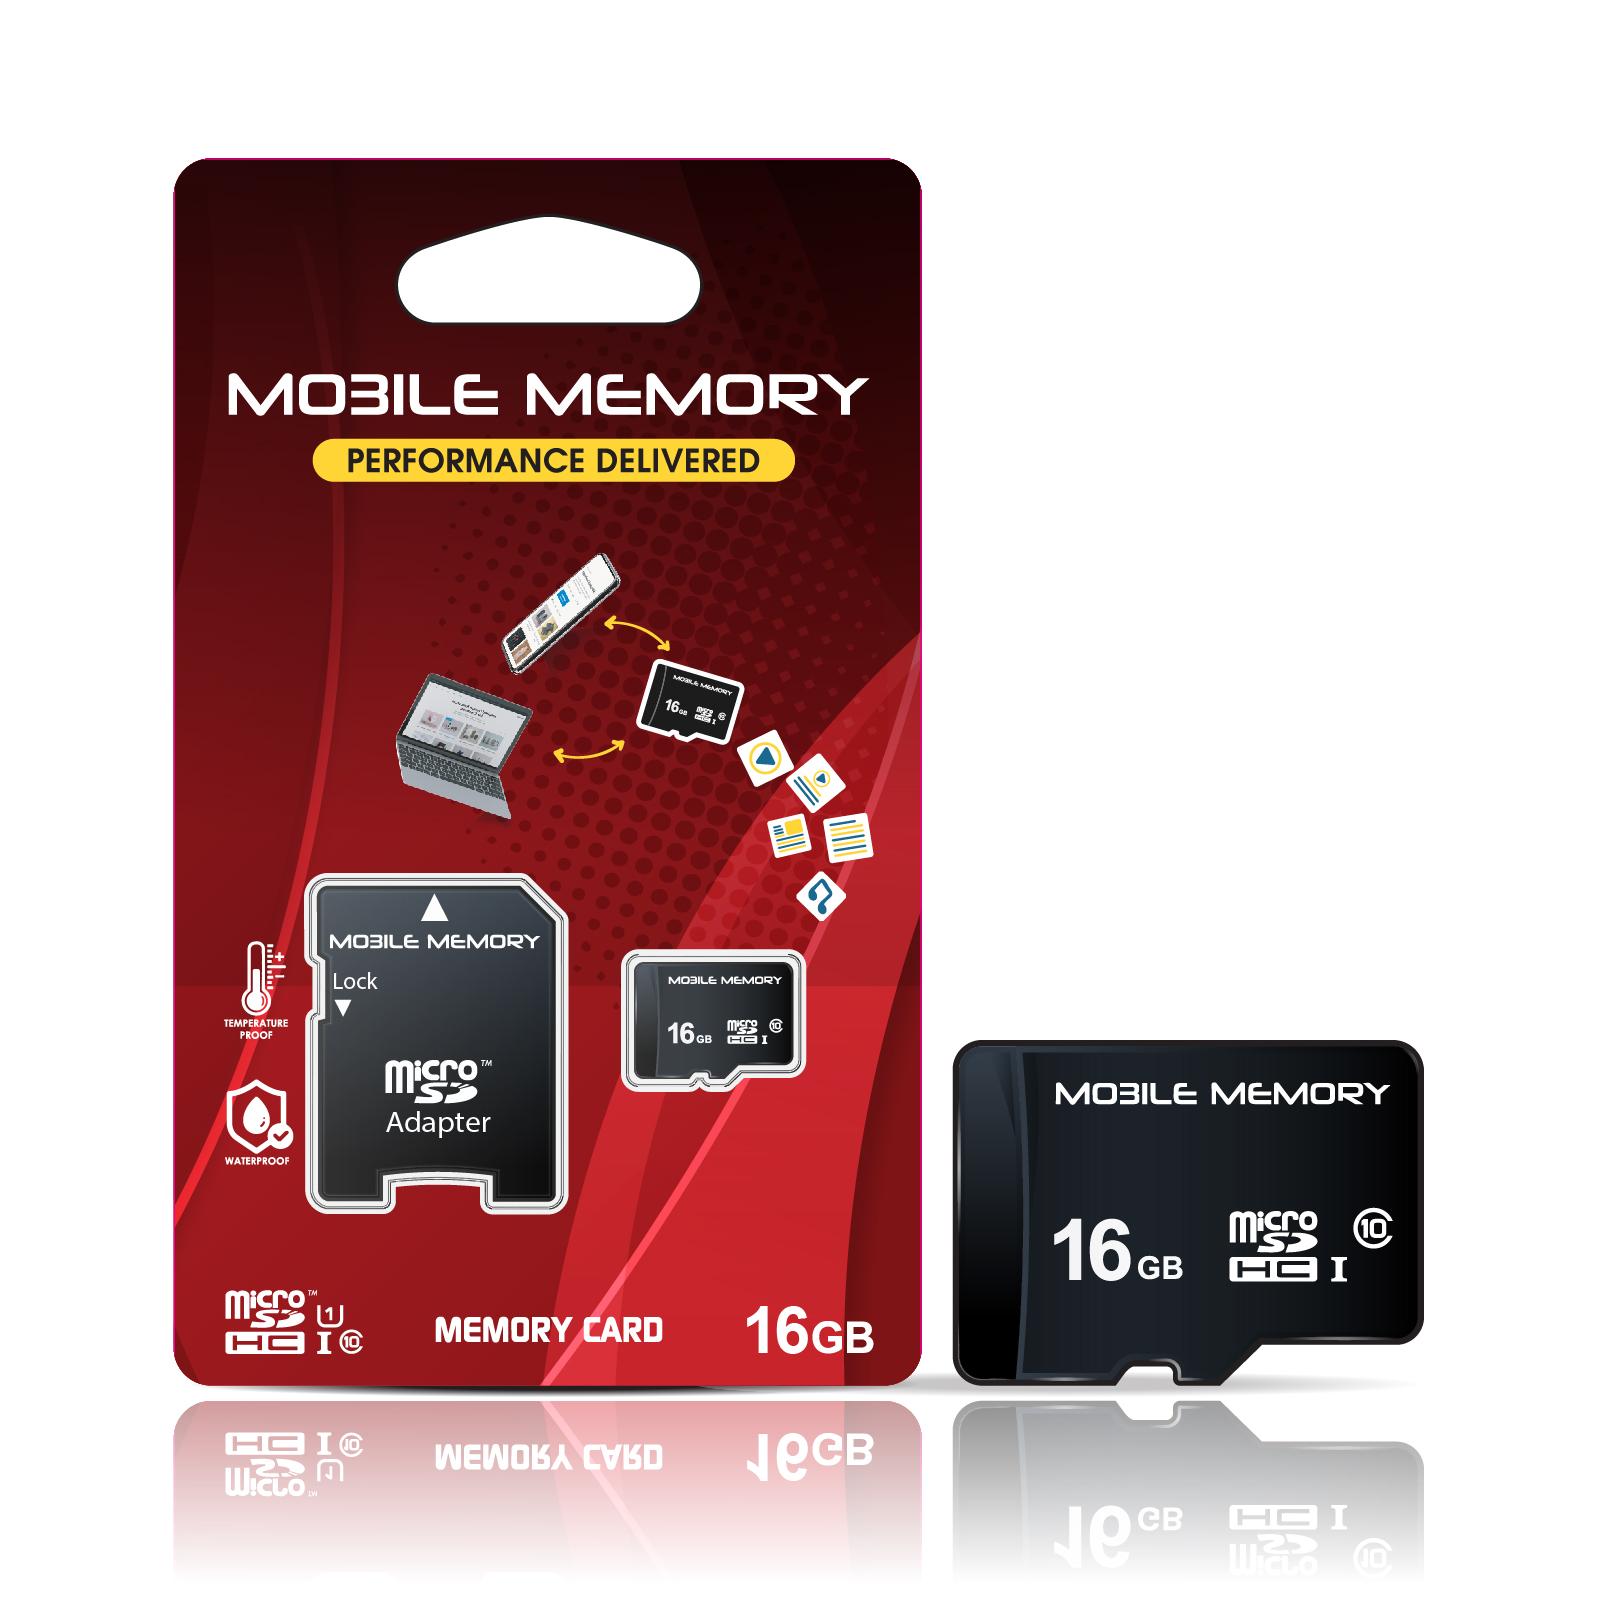 4 8 16 32 64 128 256 GB micro SD Speicherkarte Smartphone Handy Kamera Nintendo